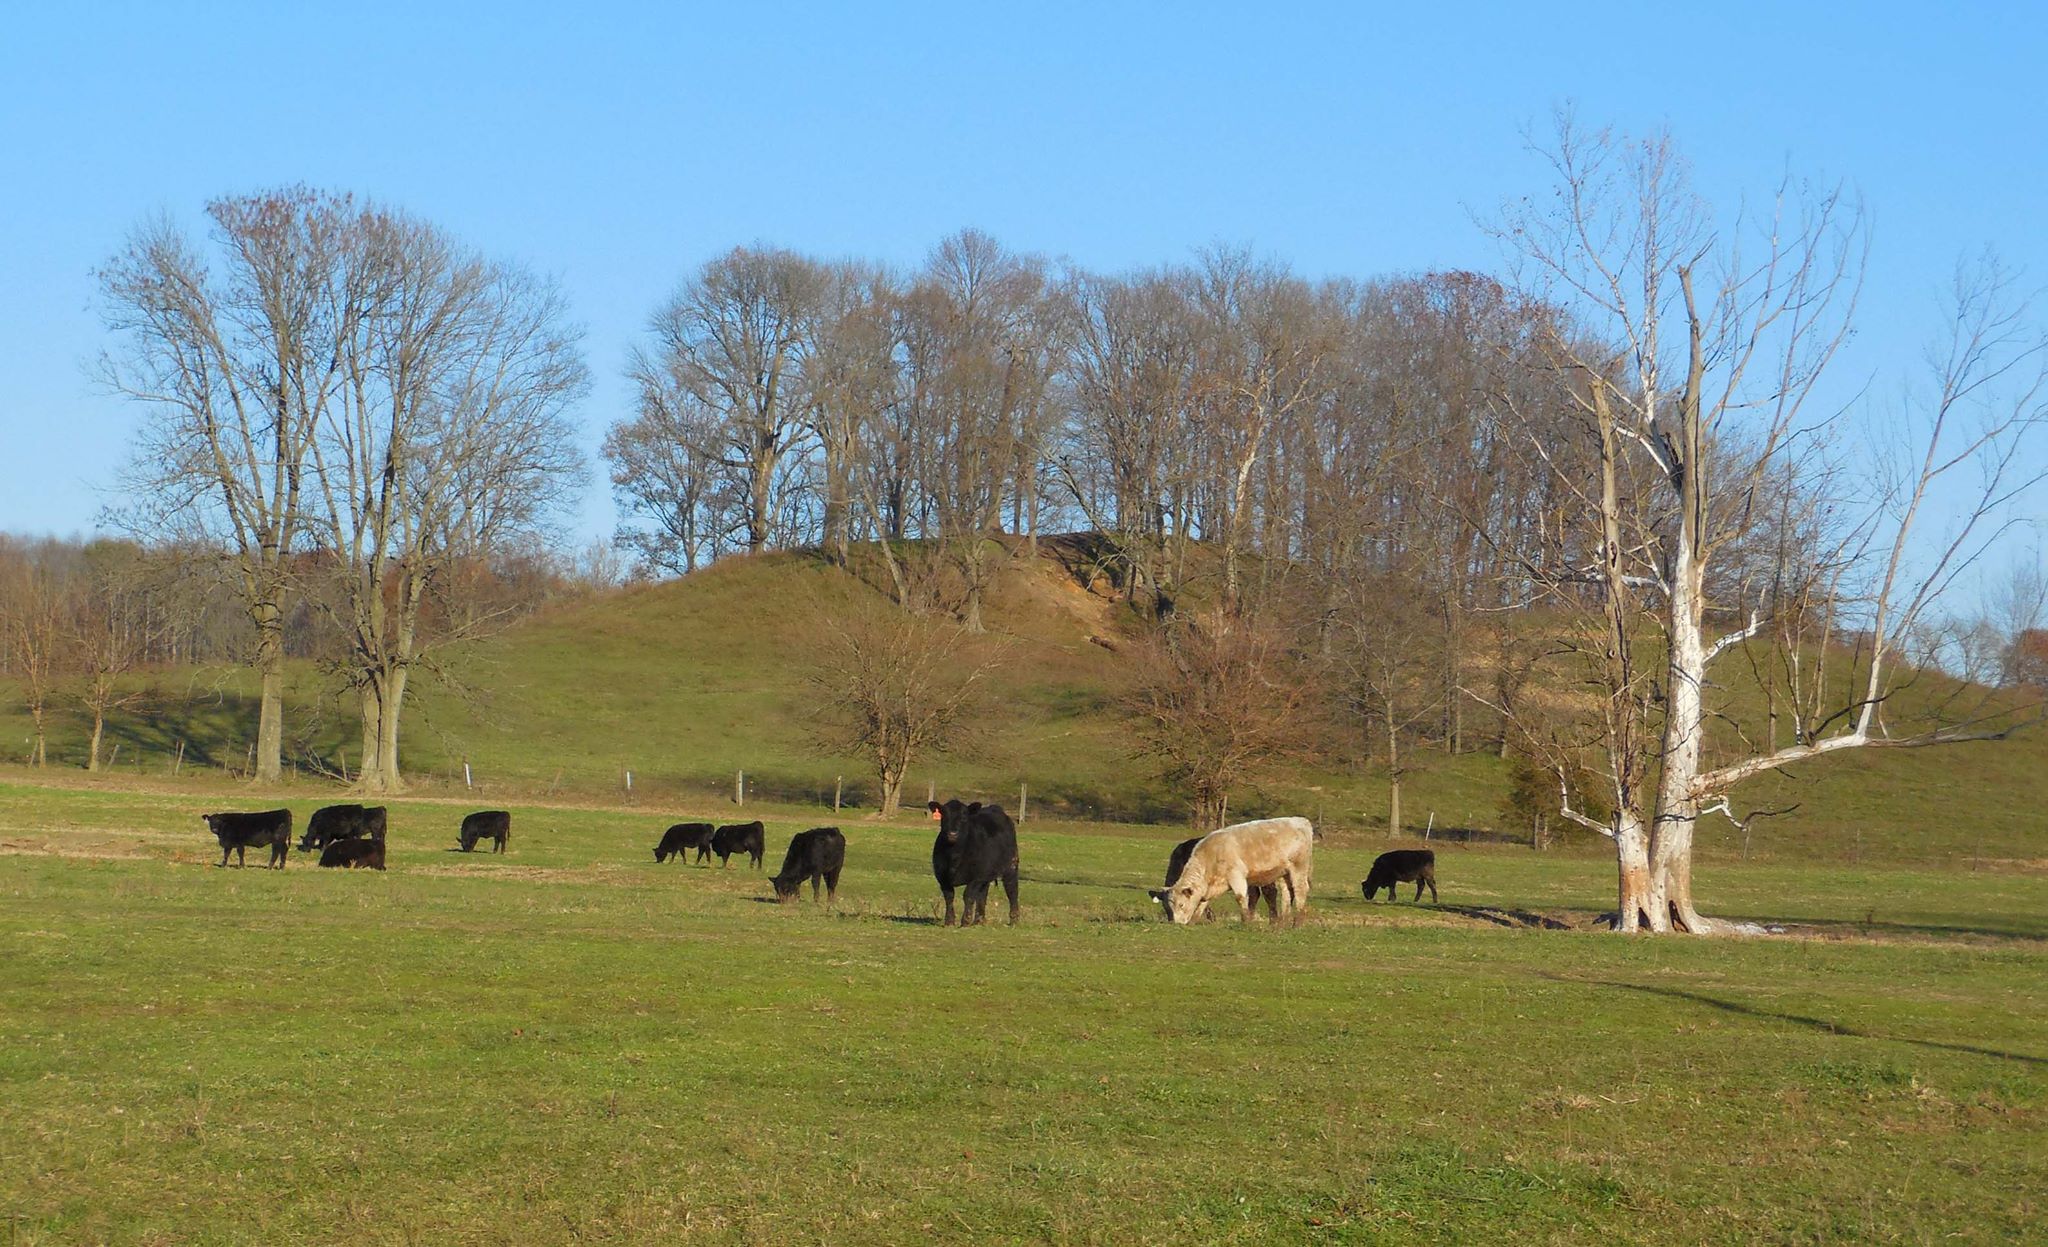 Cattle graze peacefully on Cramertown Loop.